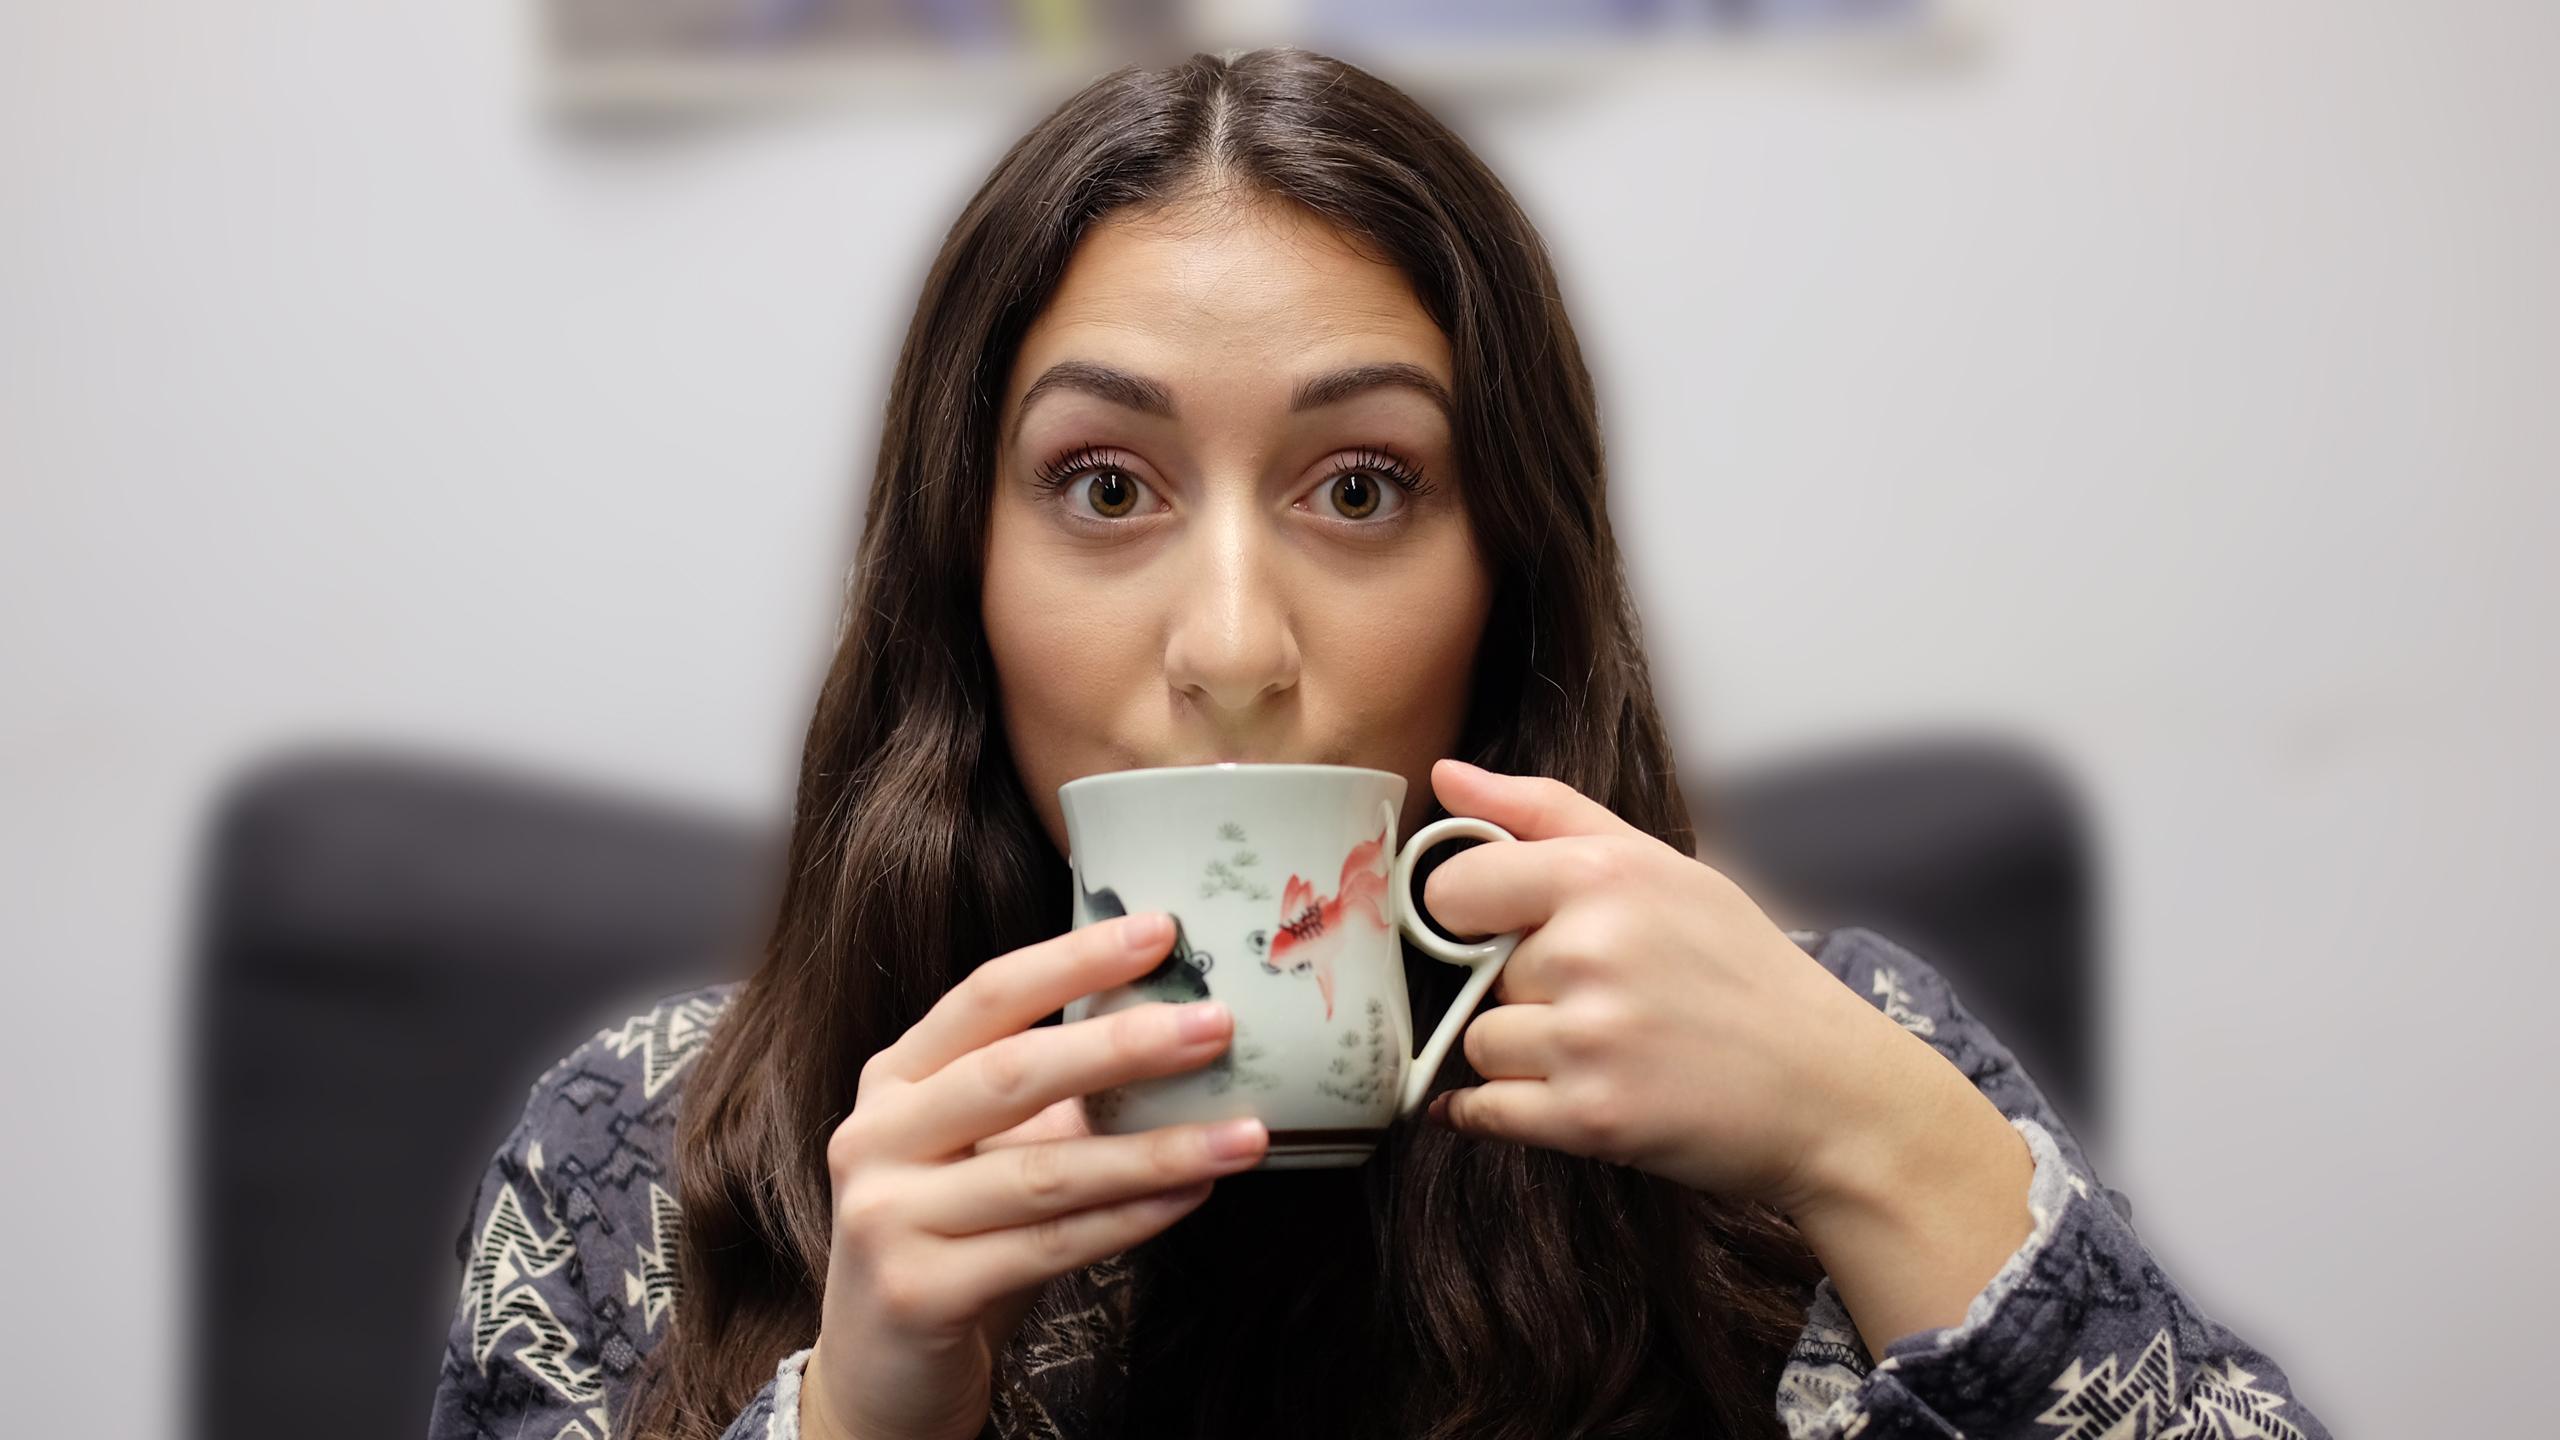 Woman drinking coffee from a mug